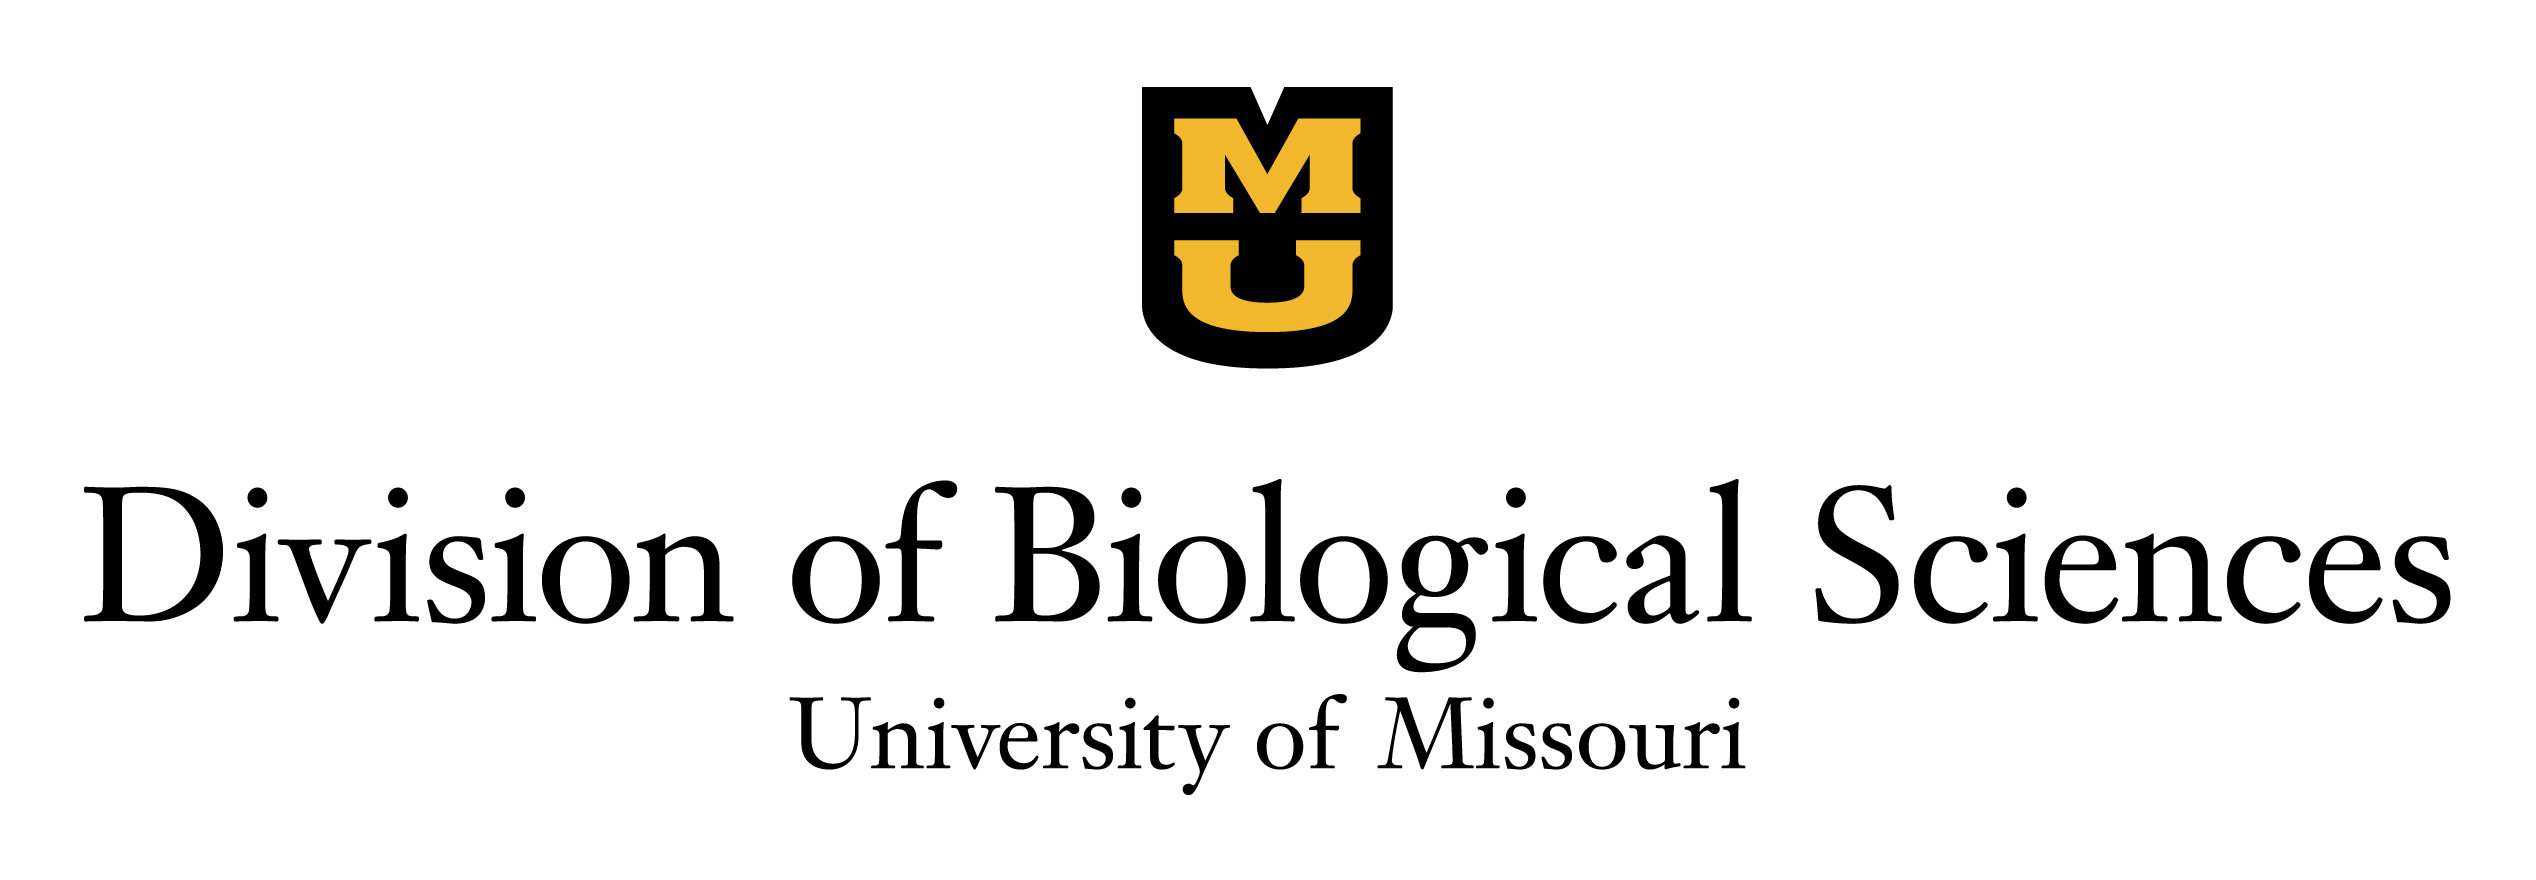 University_of_Missouri